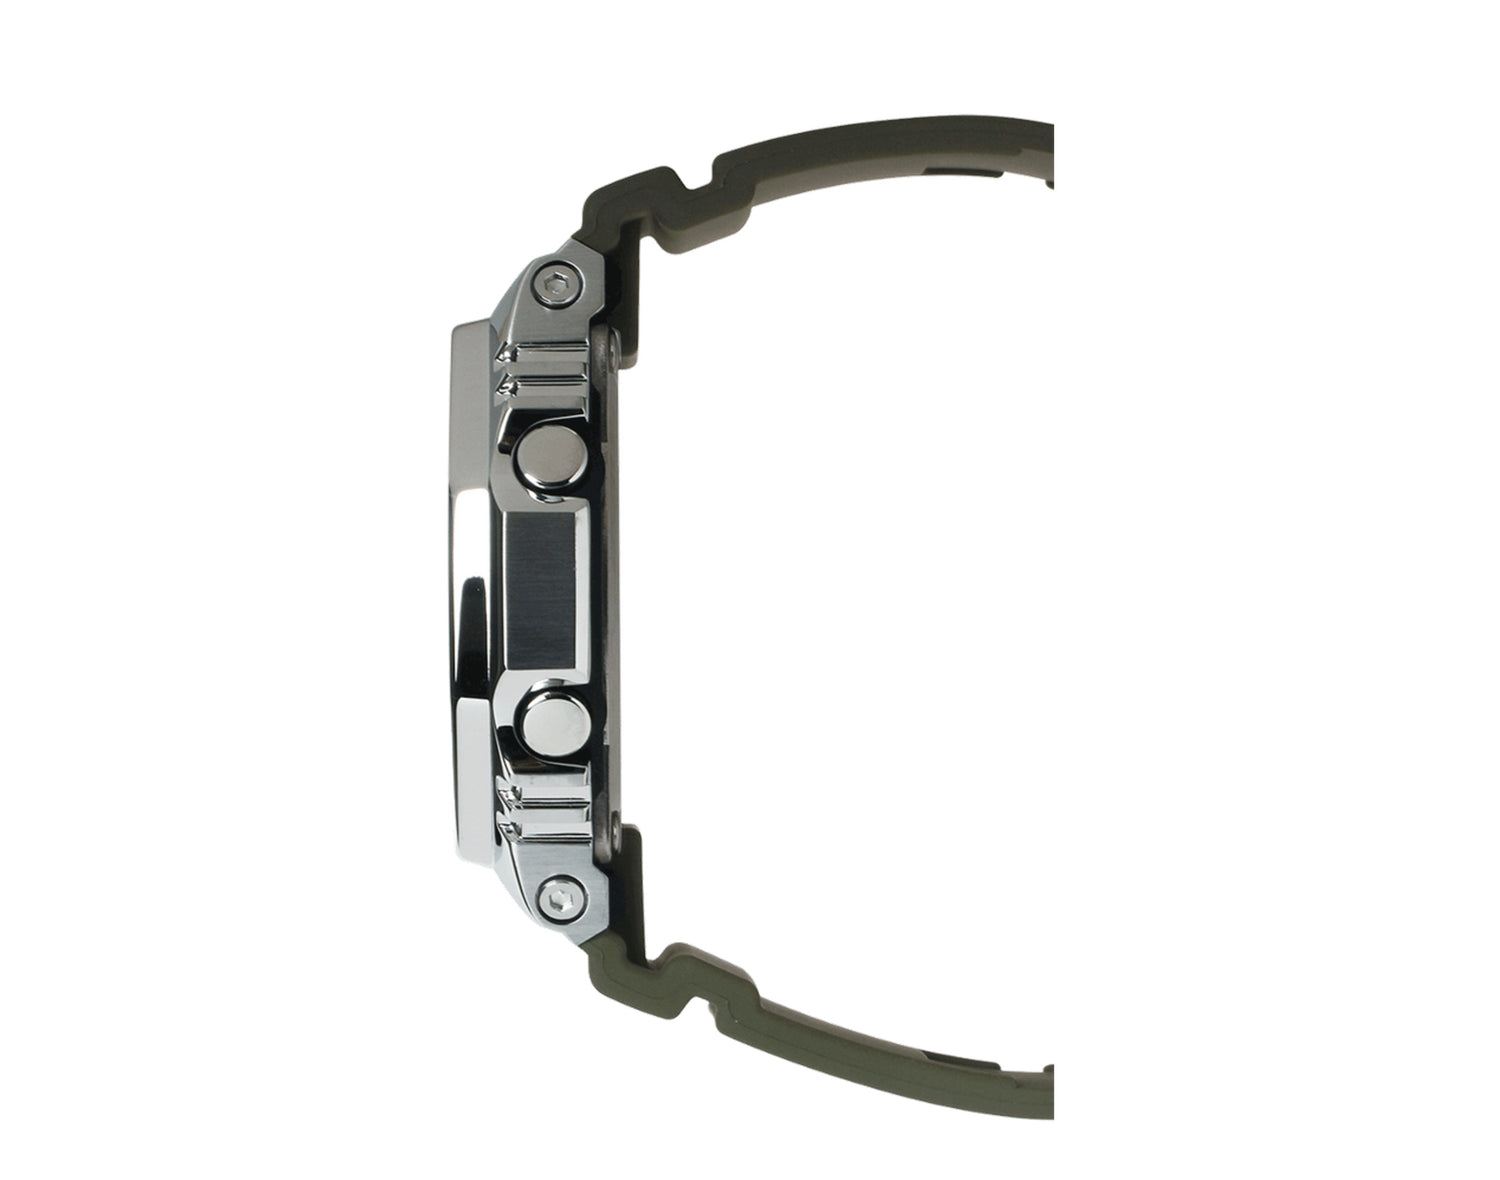 Casio G-Shock GMS2100 Analog-Digital Metal and Resin Women's Watch